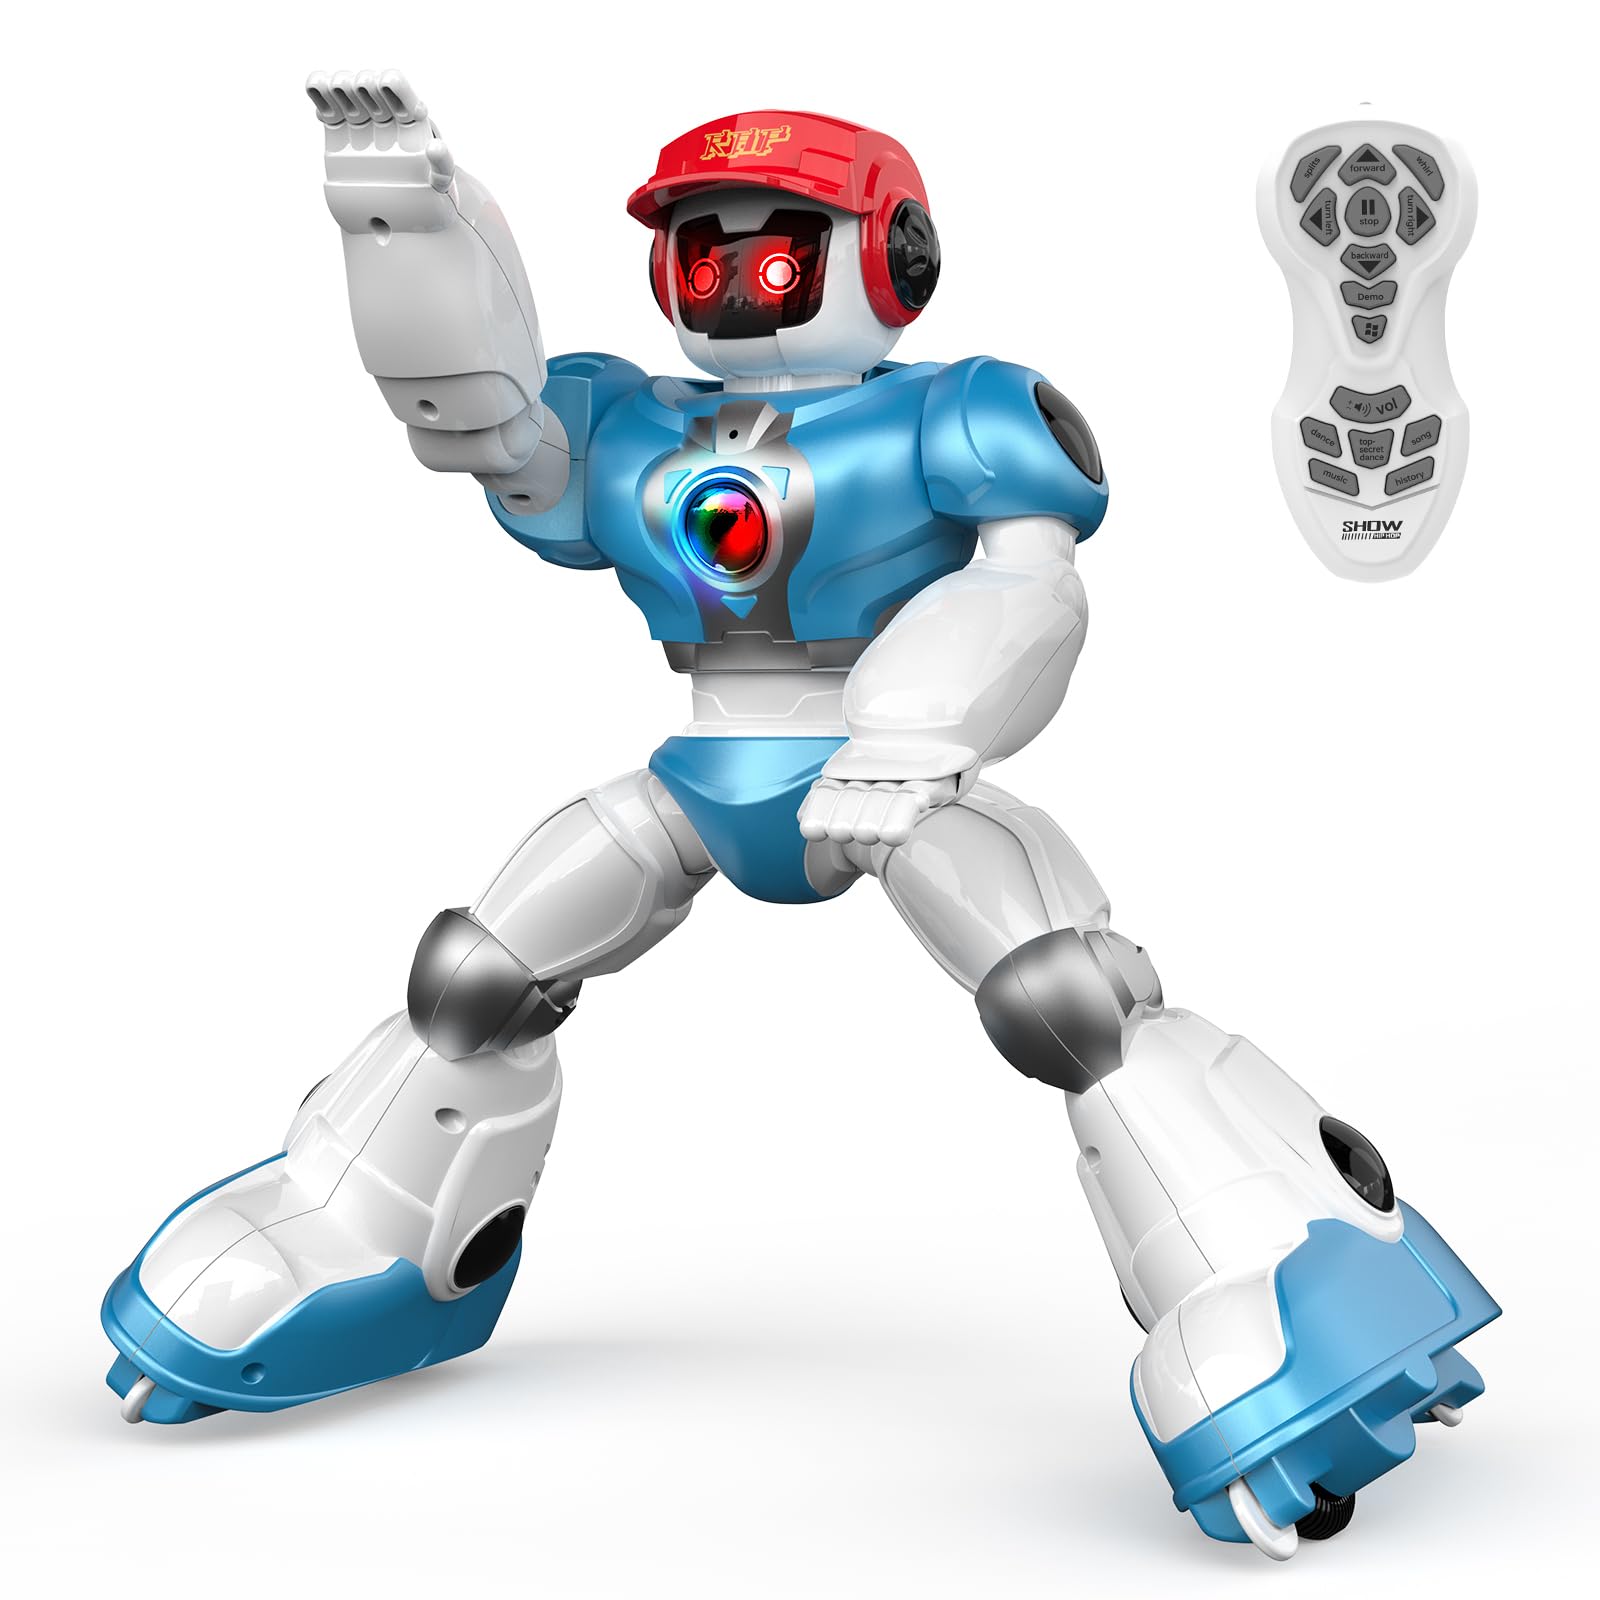 DEERC ロボット おもちゃ 子供 電動ロボット ラジコン 男の子 多機能 ダンスロボット クリスマス プレゼント プログラム可能 英語会話機能 女の子 知育玩具 40分操作時間 USB充電 誕生日 小学生 中学生 99888-6